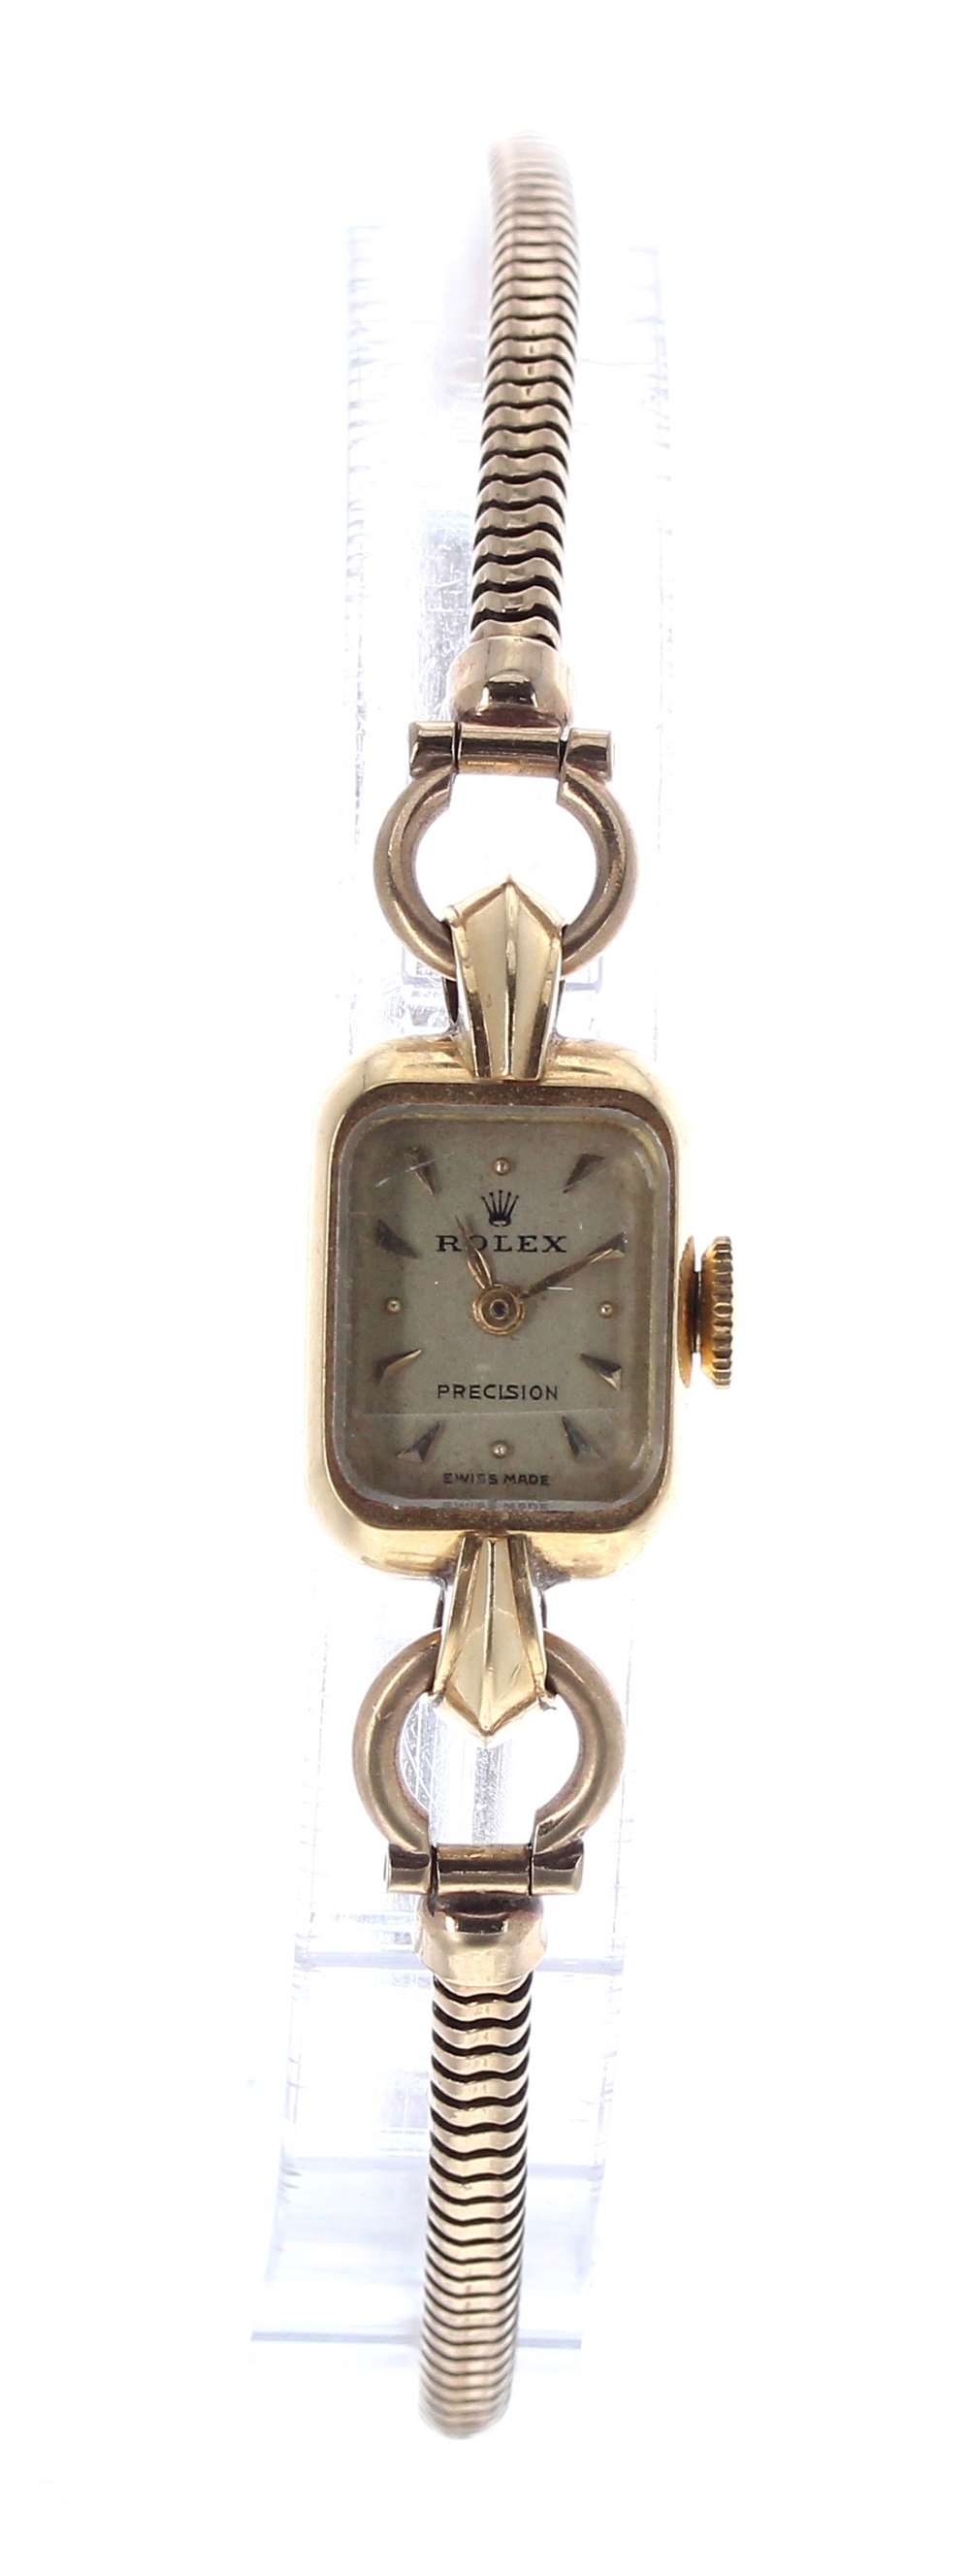 Rolex Precision 18ct rectangular lady's bracelet watch, case no. 8312, rectangular silvered dial